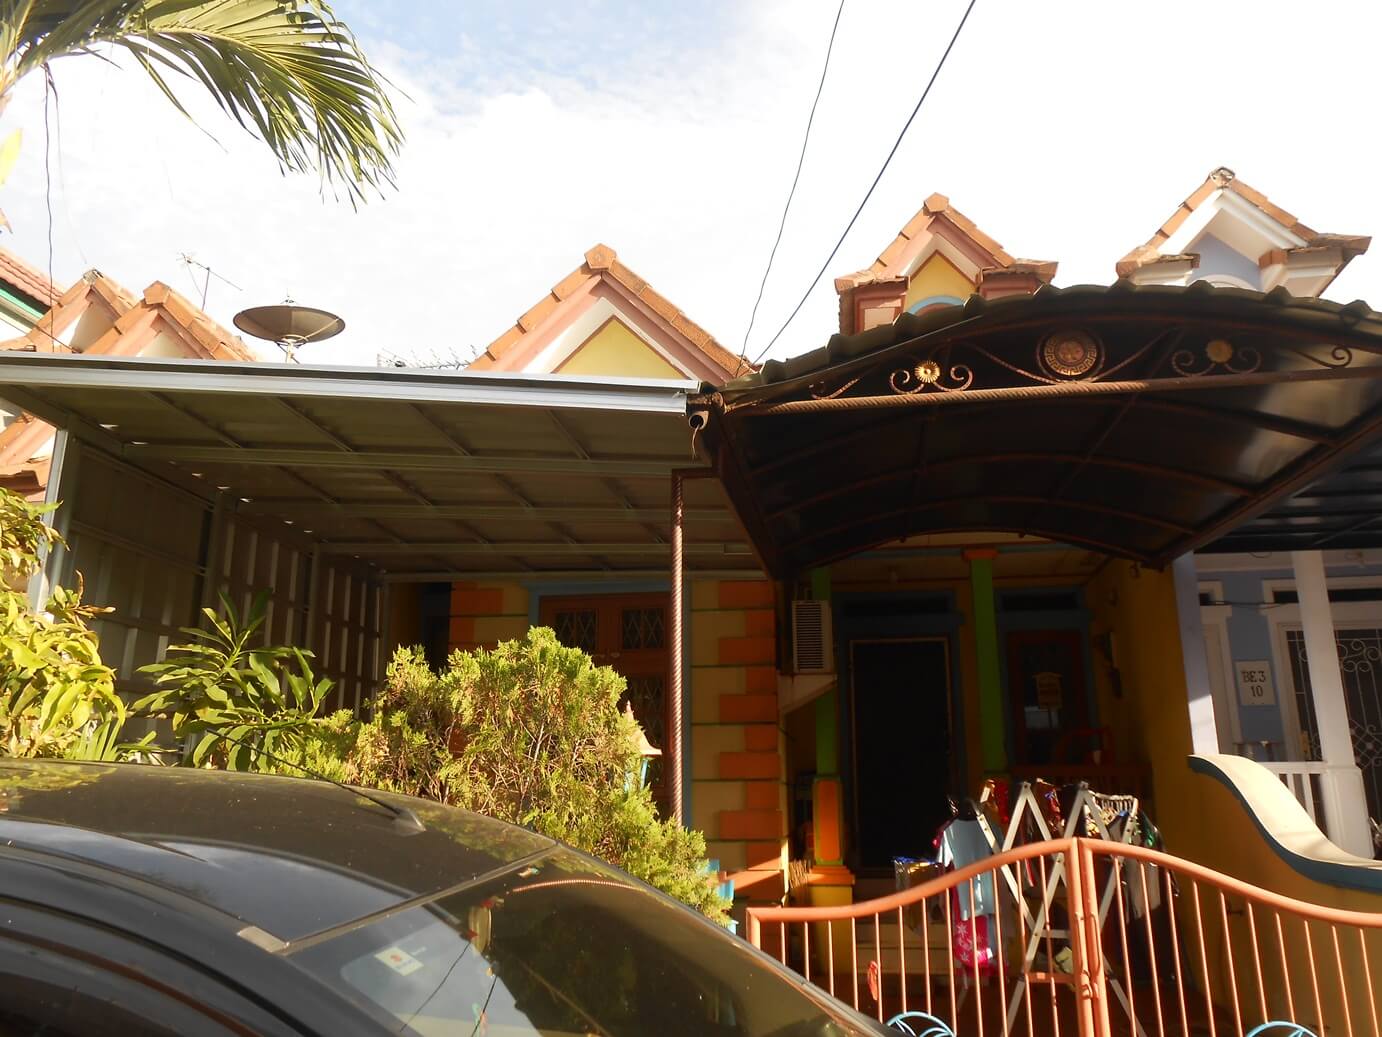  Canopy  Spandek  Citra 2 Ext Jakarta Baja Ringan Poris 